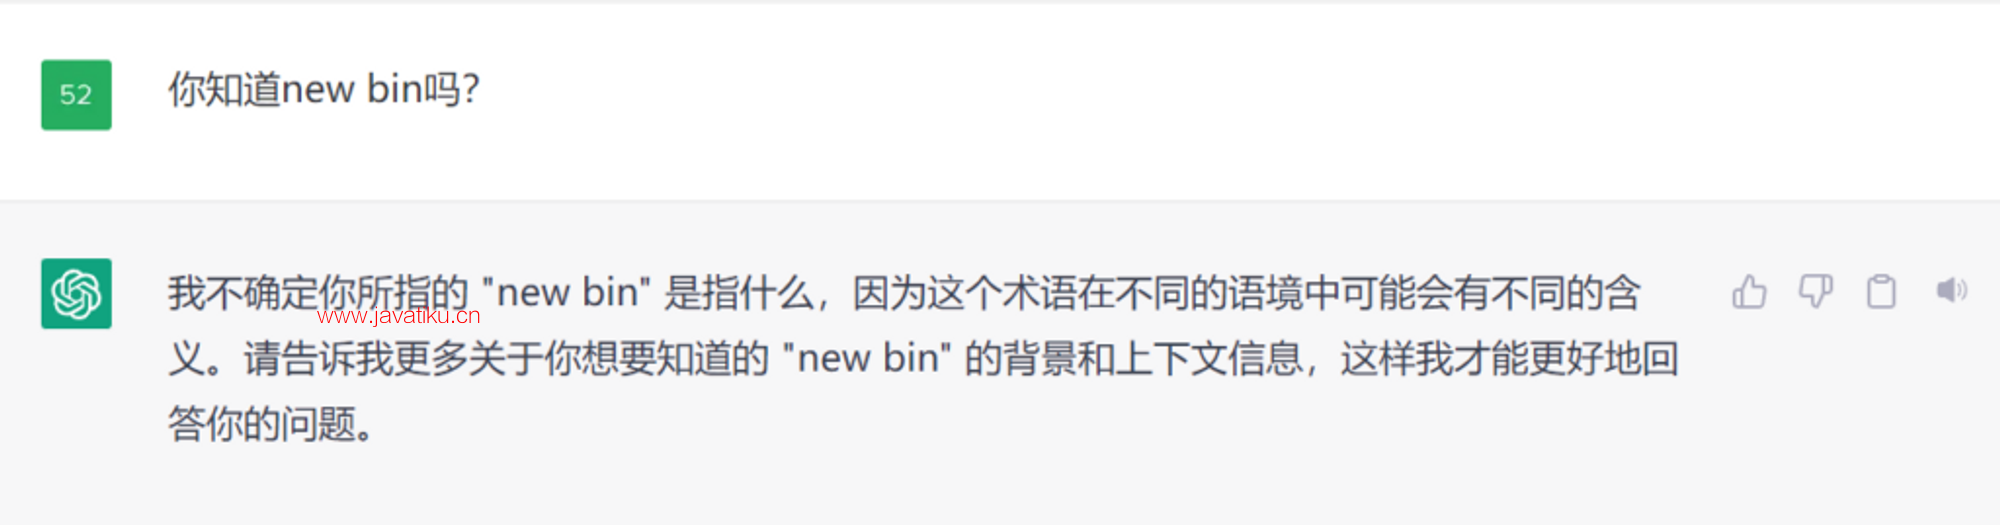 ChatGPT并不知道New bin是什么.png